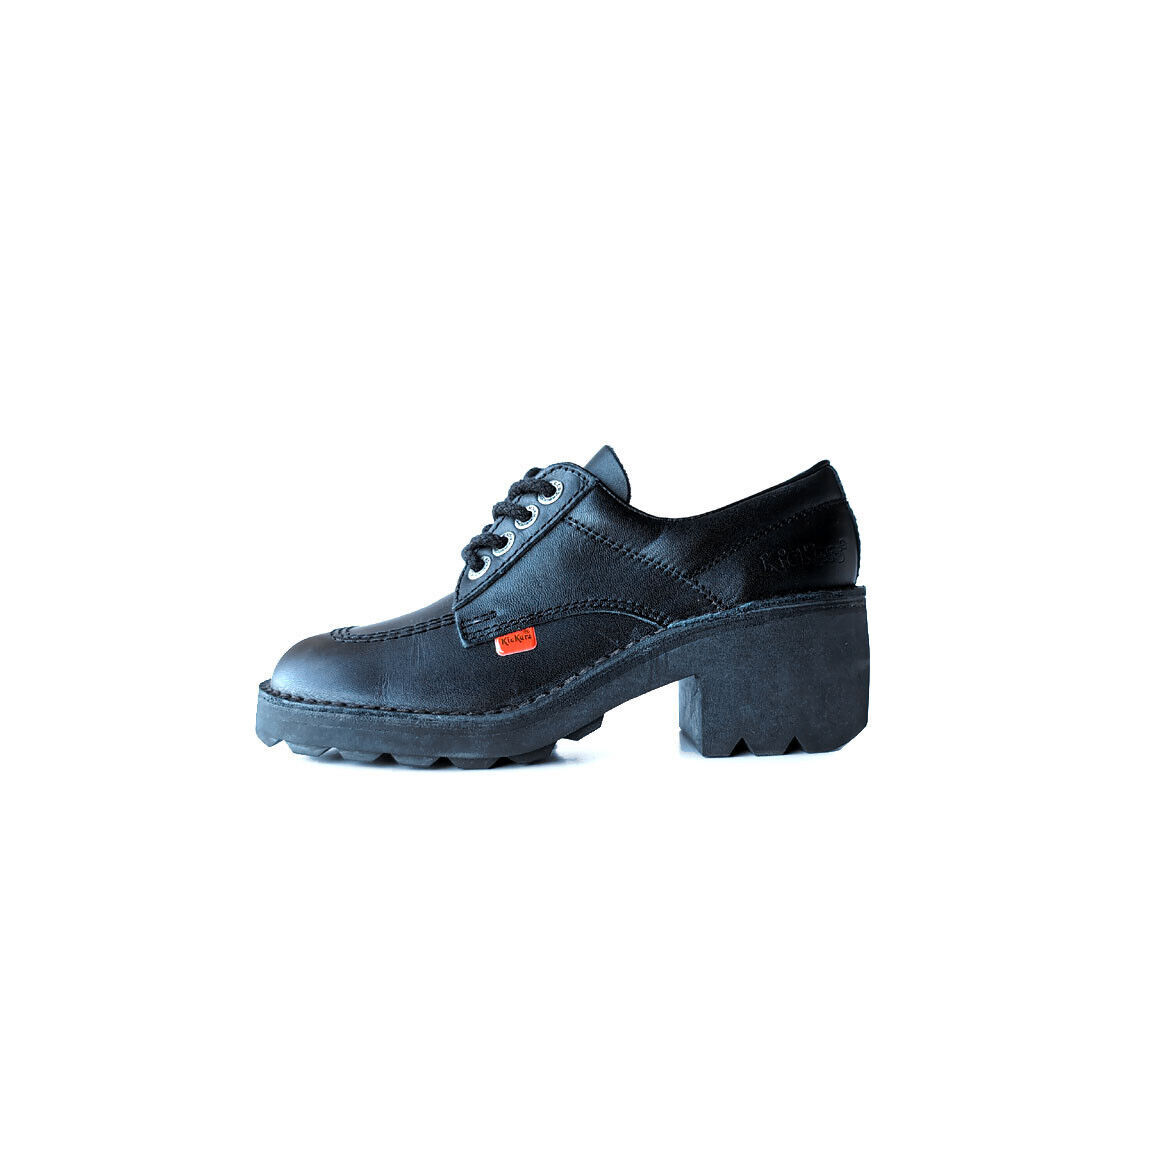 Primary image for VTG KICKERS Shoes 90's Black Leather Lace Up Platform Shoes *EXCELLENT* SZ 5